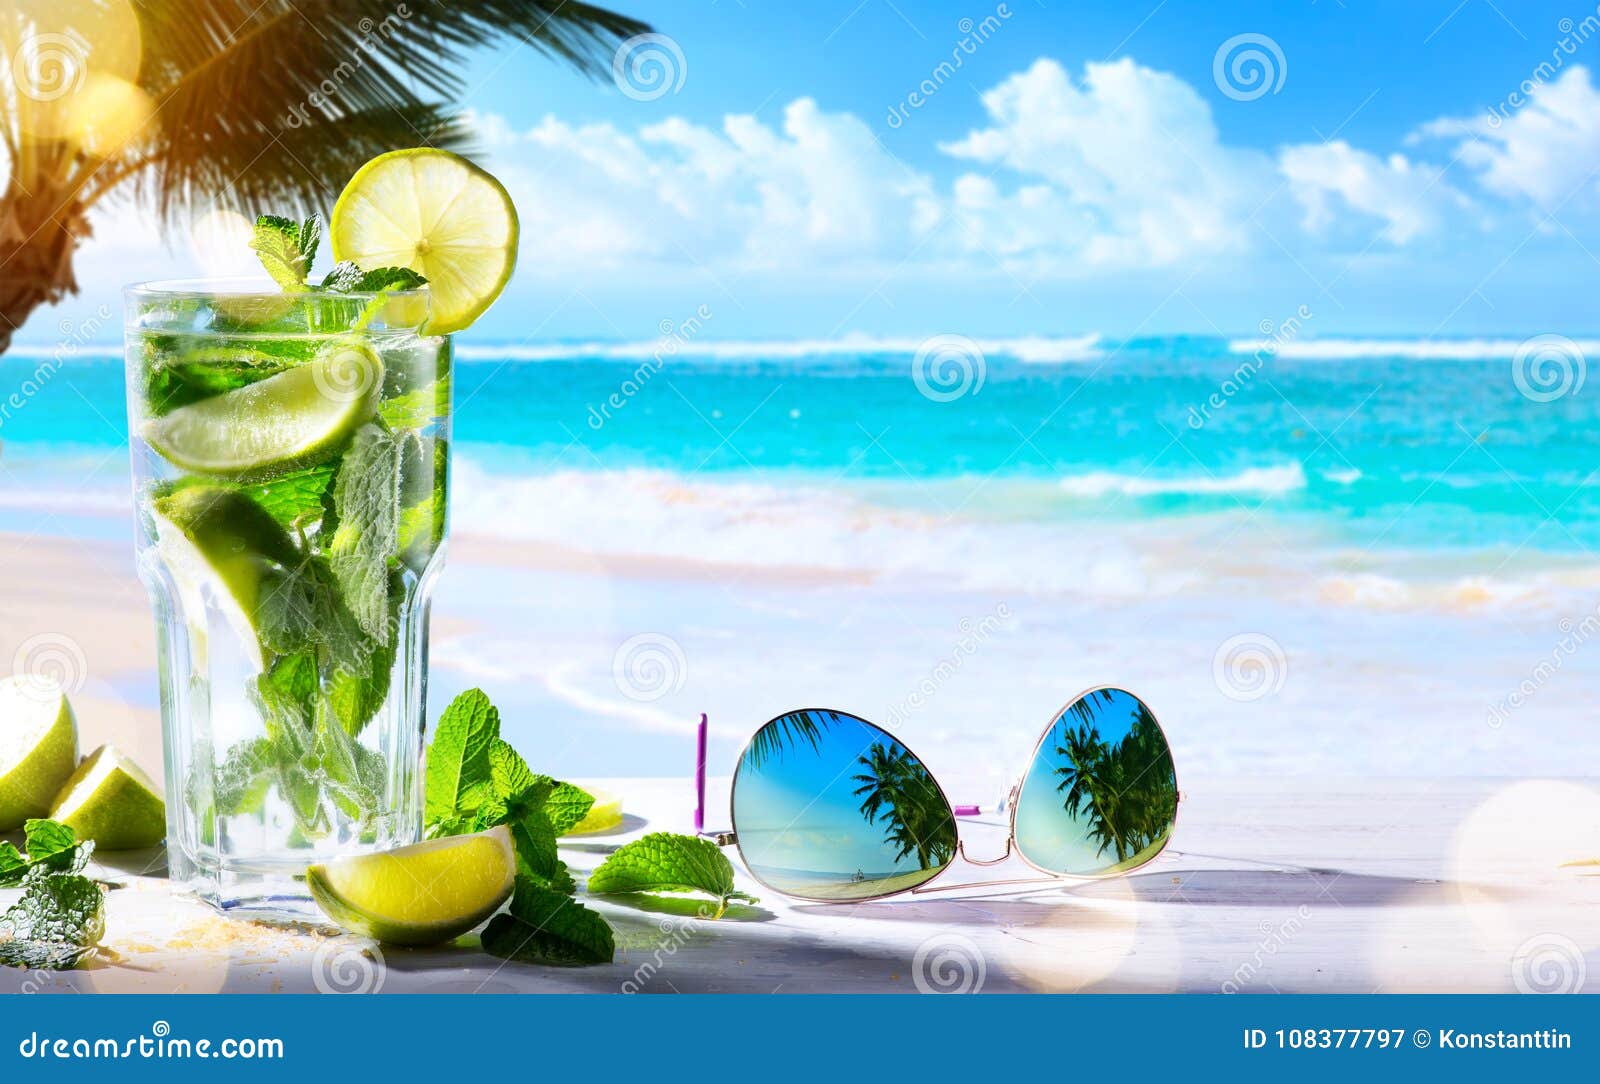 art summer tropical beach wine bar; mojito cocktail drink